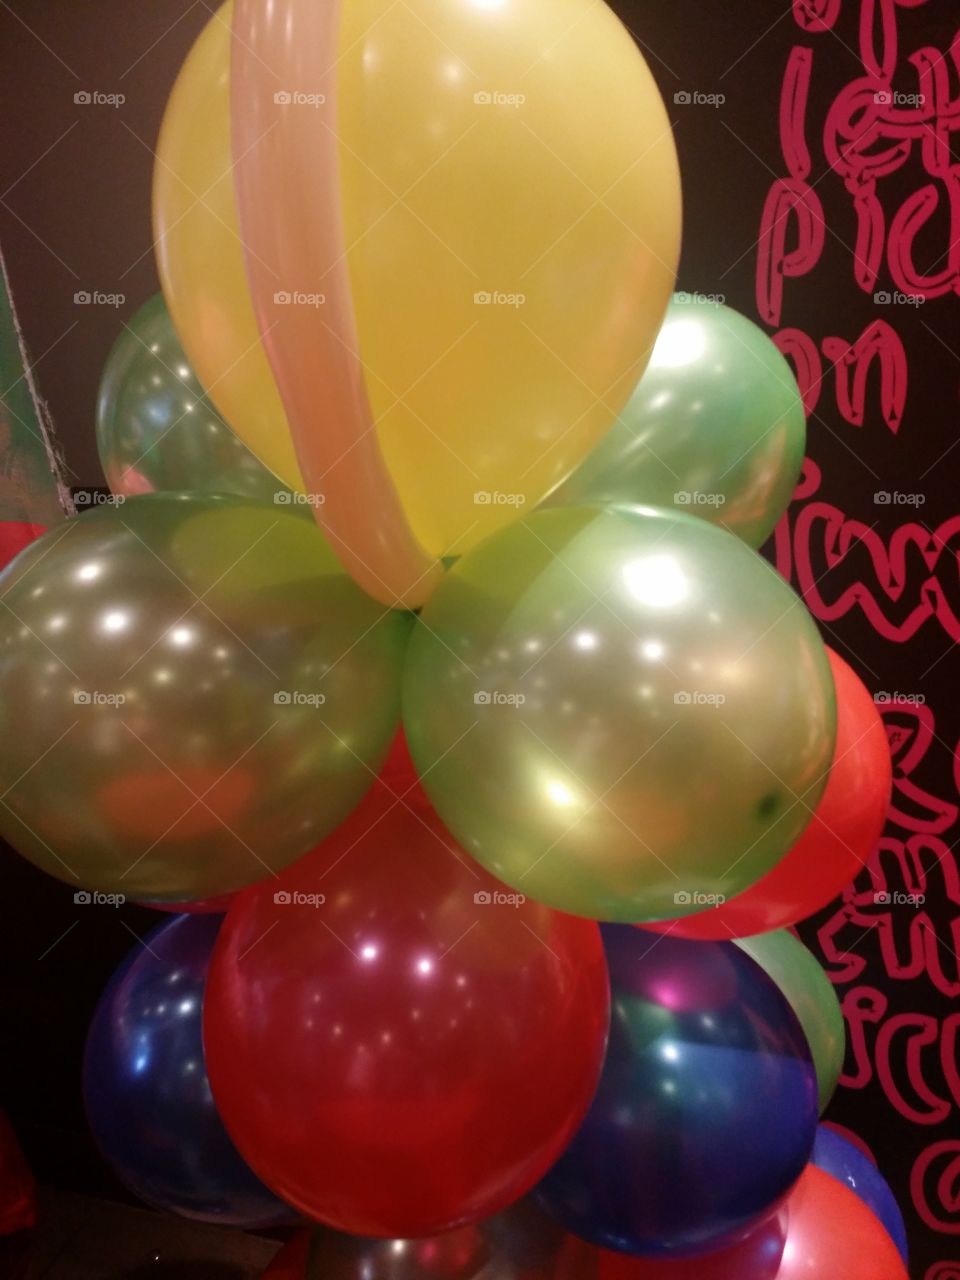 balloons combination😀